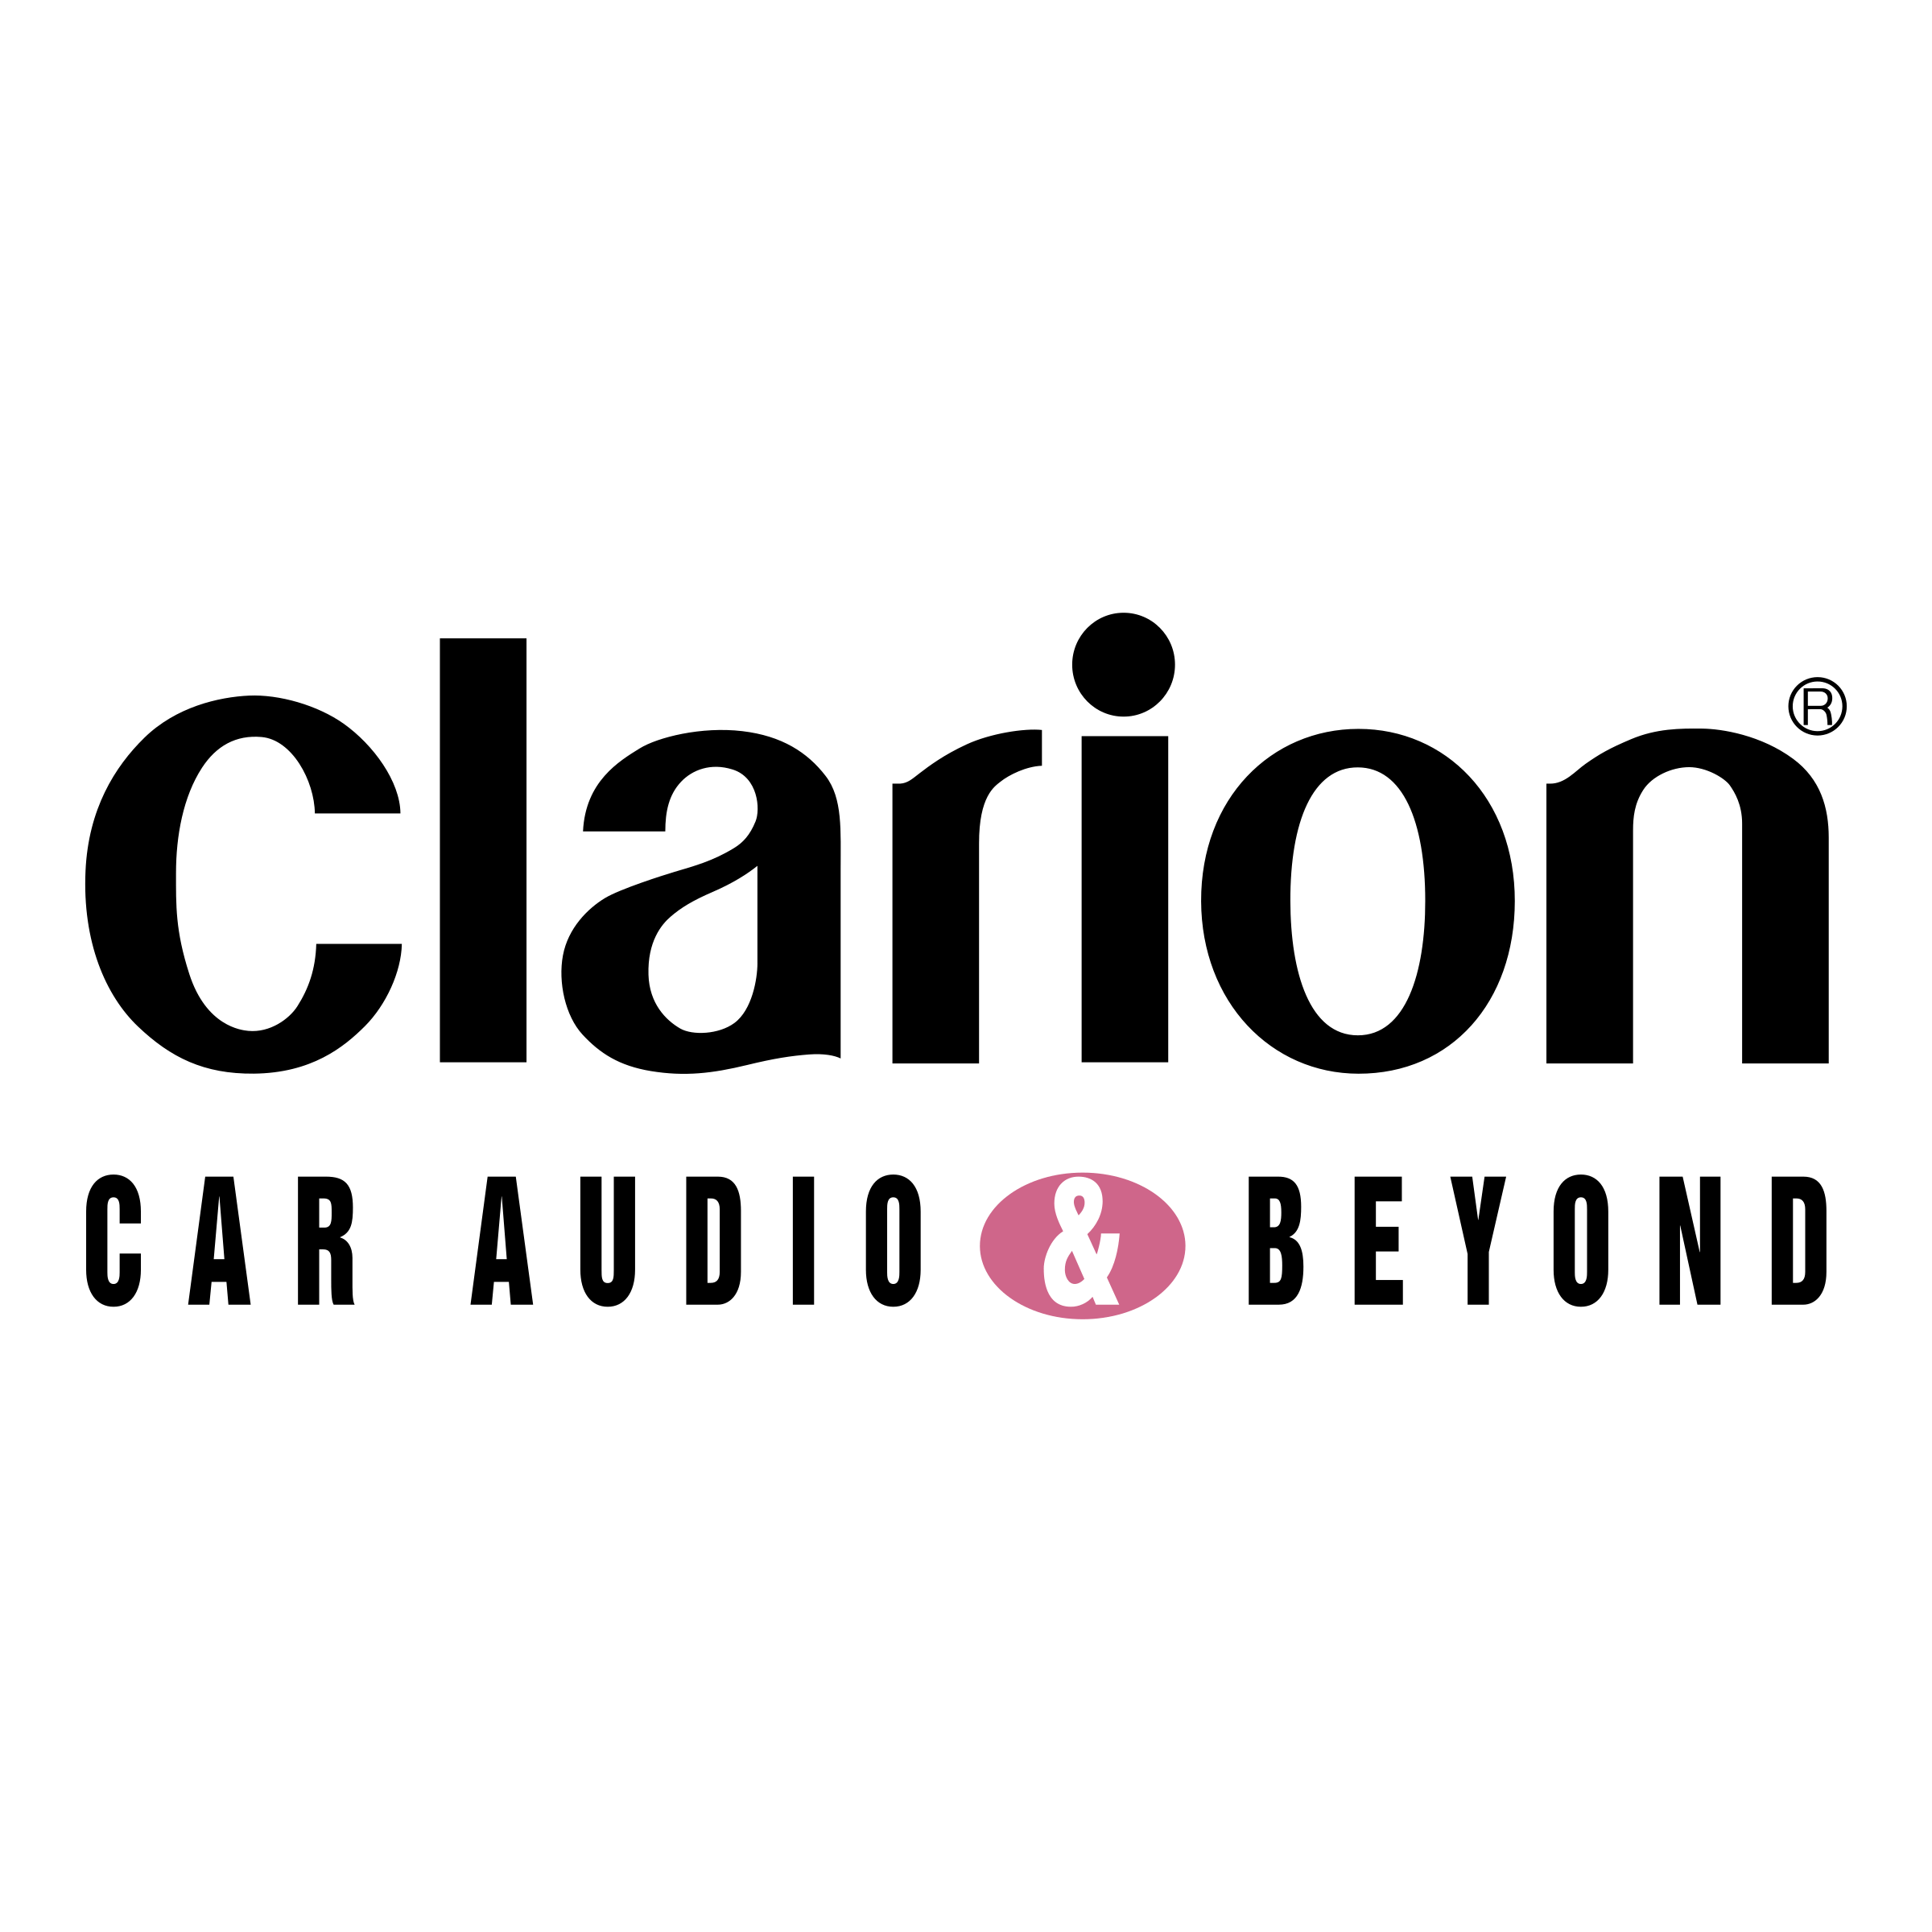 Clarion Logo - Clarion Logo PNG Transparent & SVG Vector